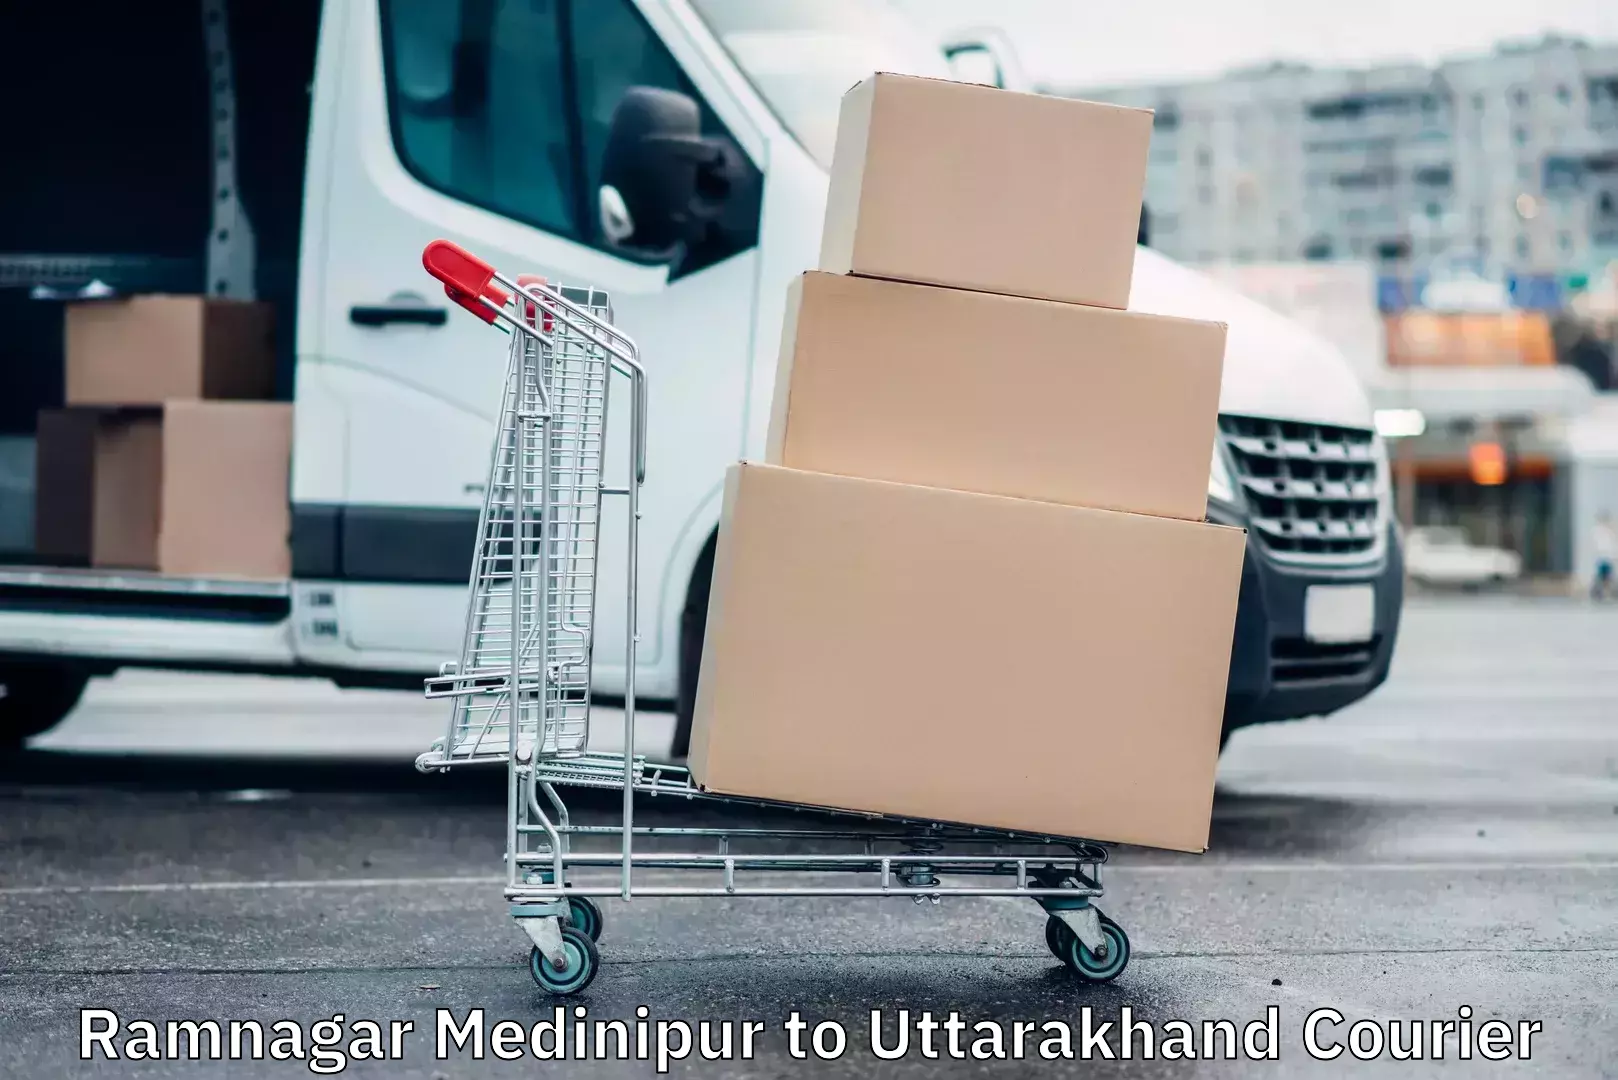 User-friendly courier app Ramnagar Medinipur to Uttarakhand